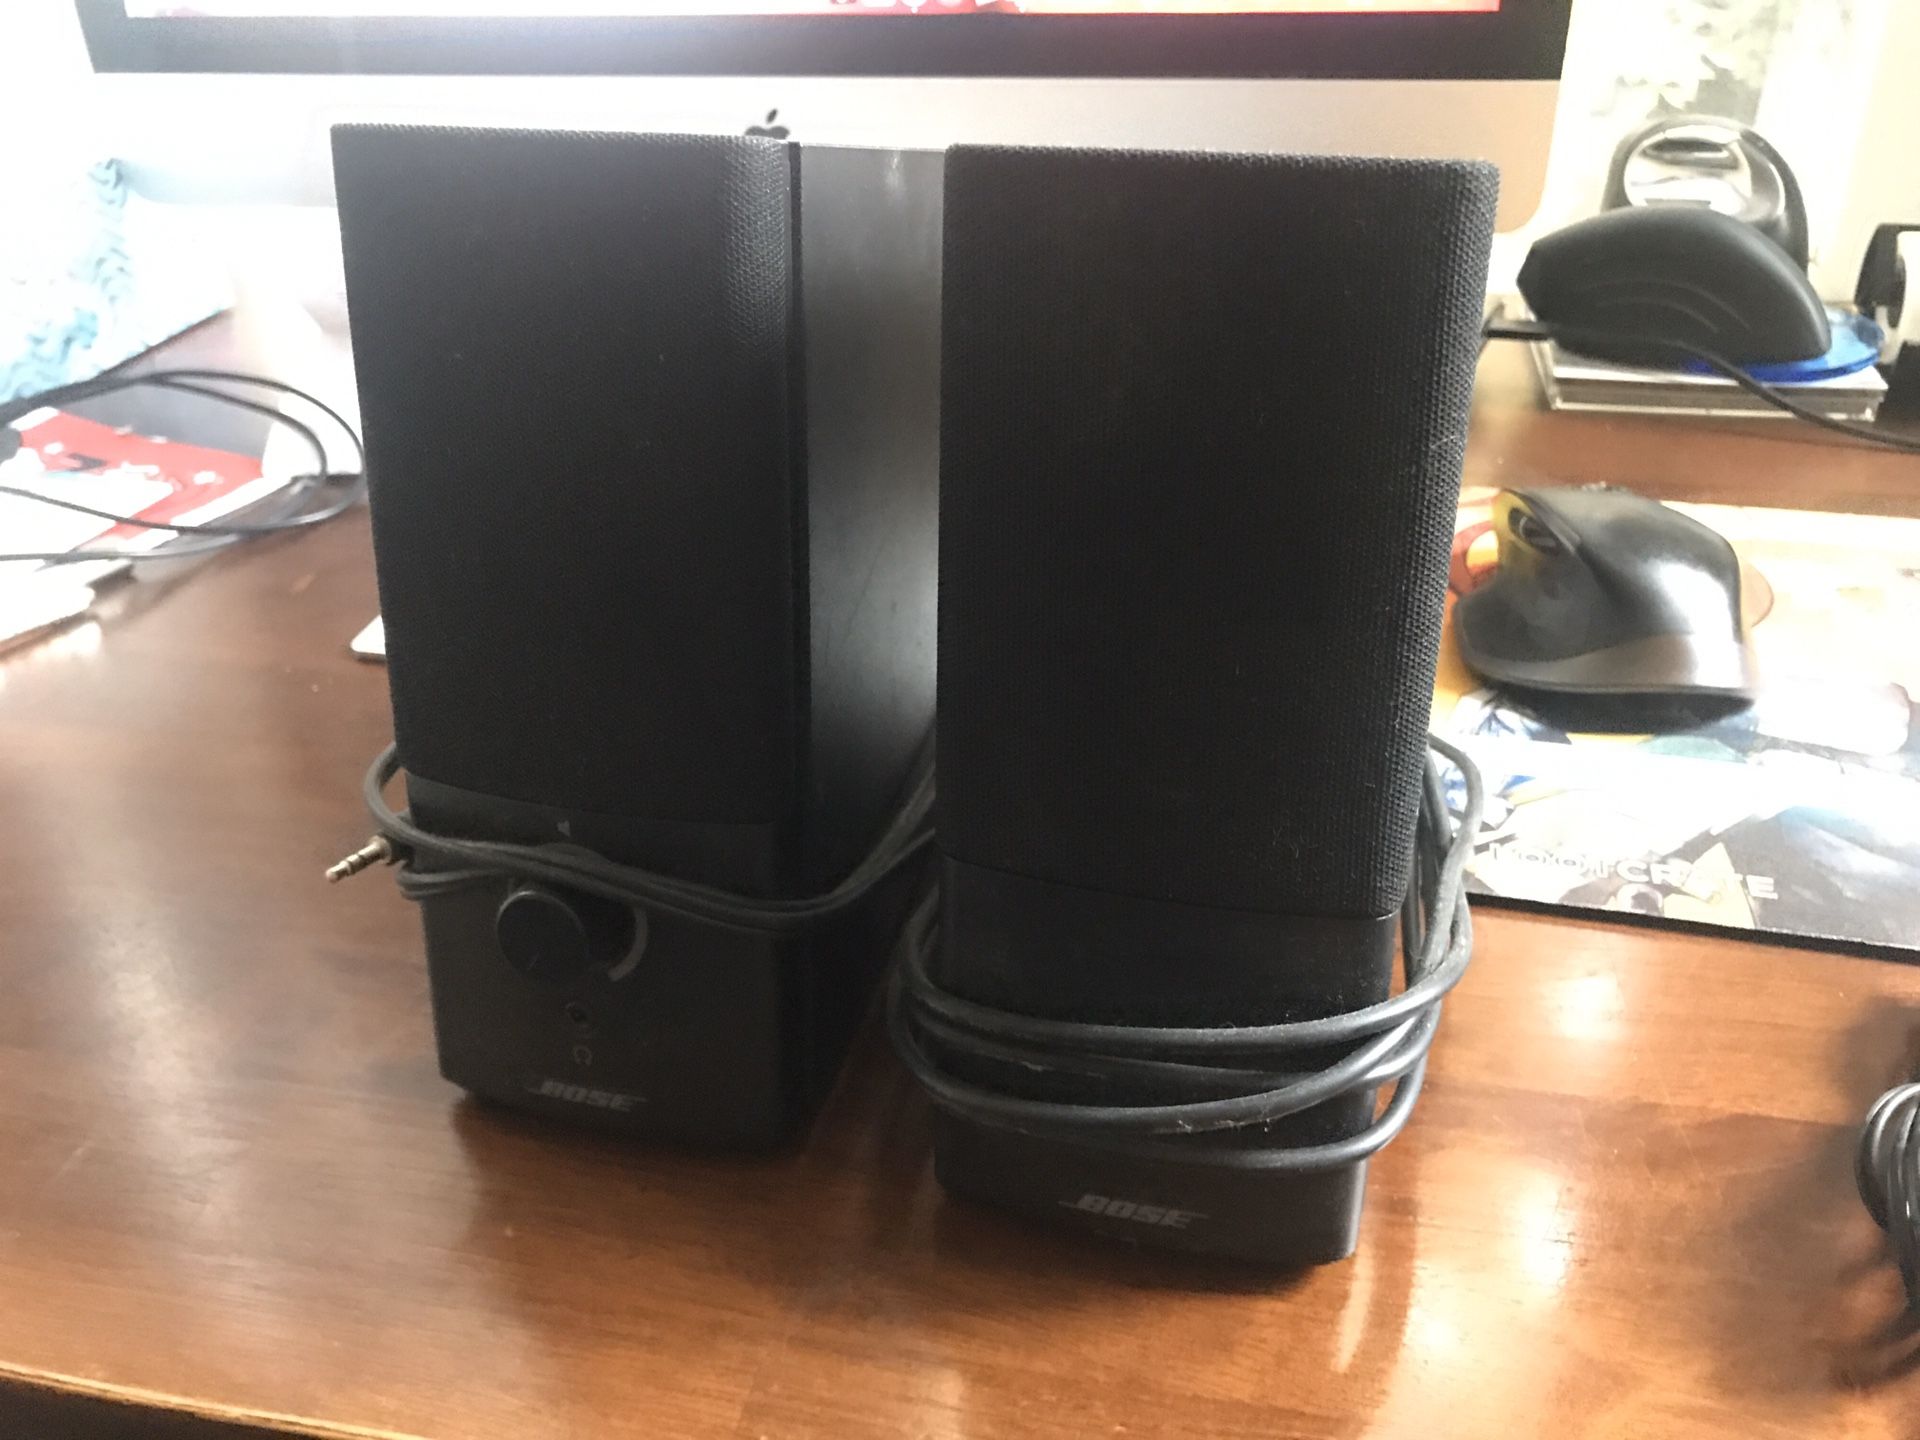 Bose Companion 2 Series III computer speakers